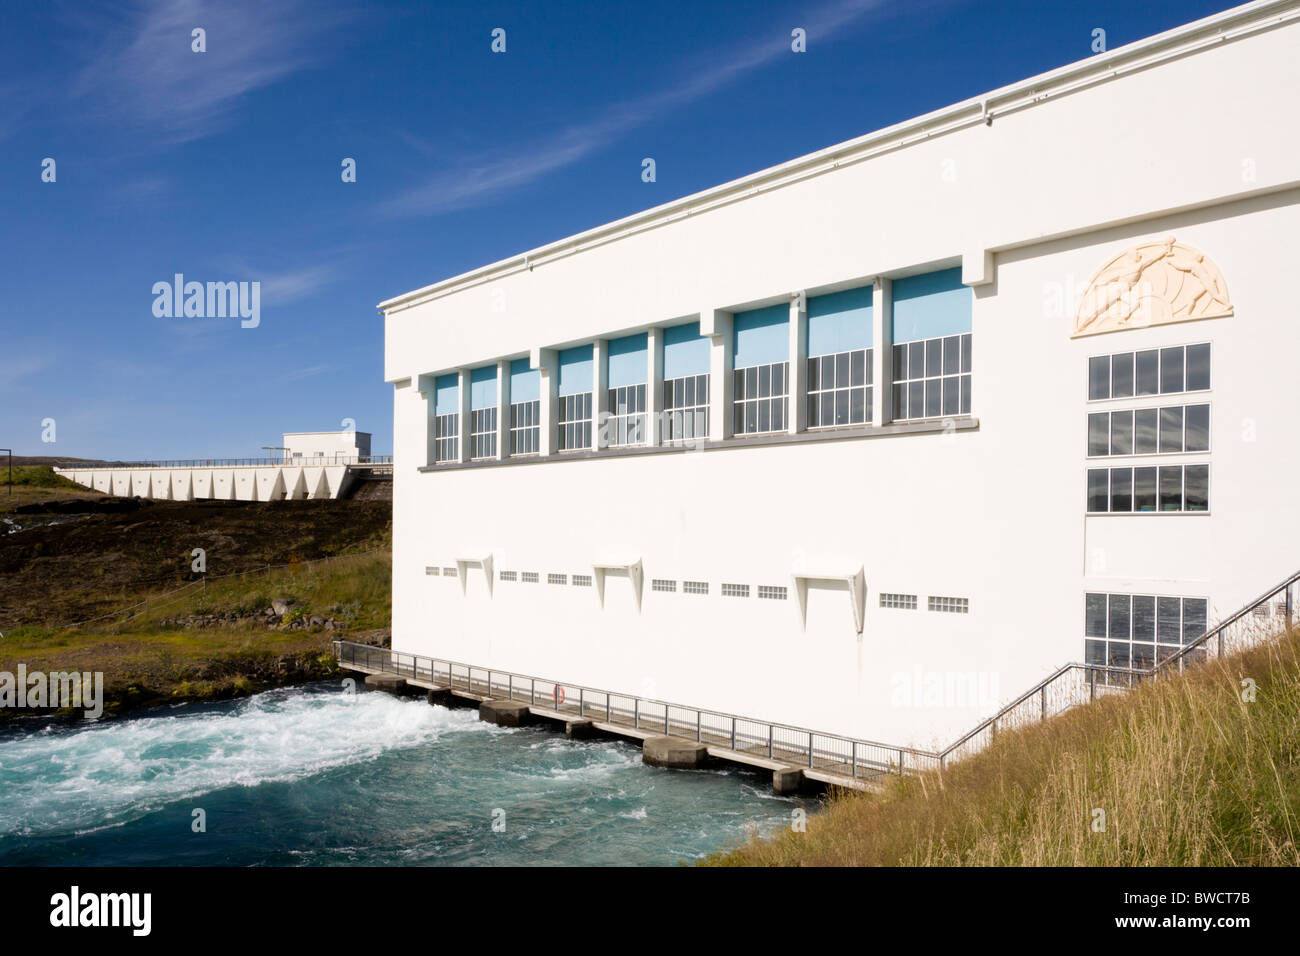 Ljosafoss hydroelektrischen Kraftwerk in Sogid Fluss gebaut 1937. Süd-Island. Stockfoto